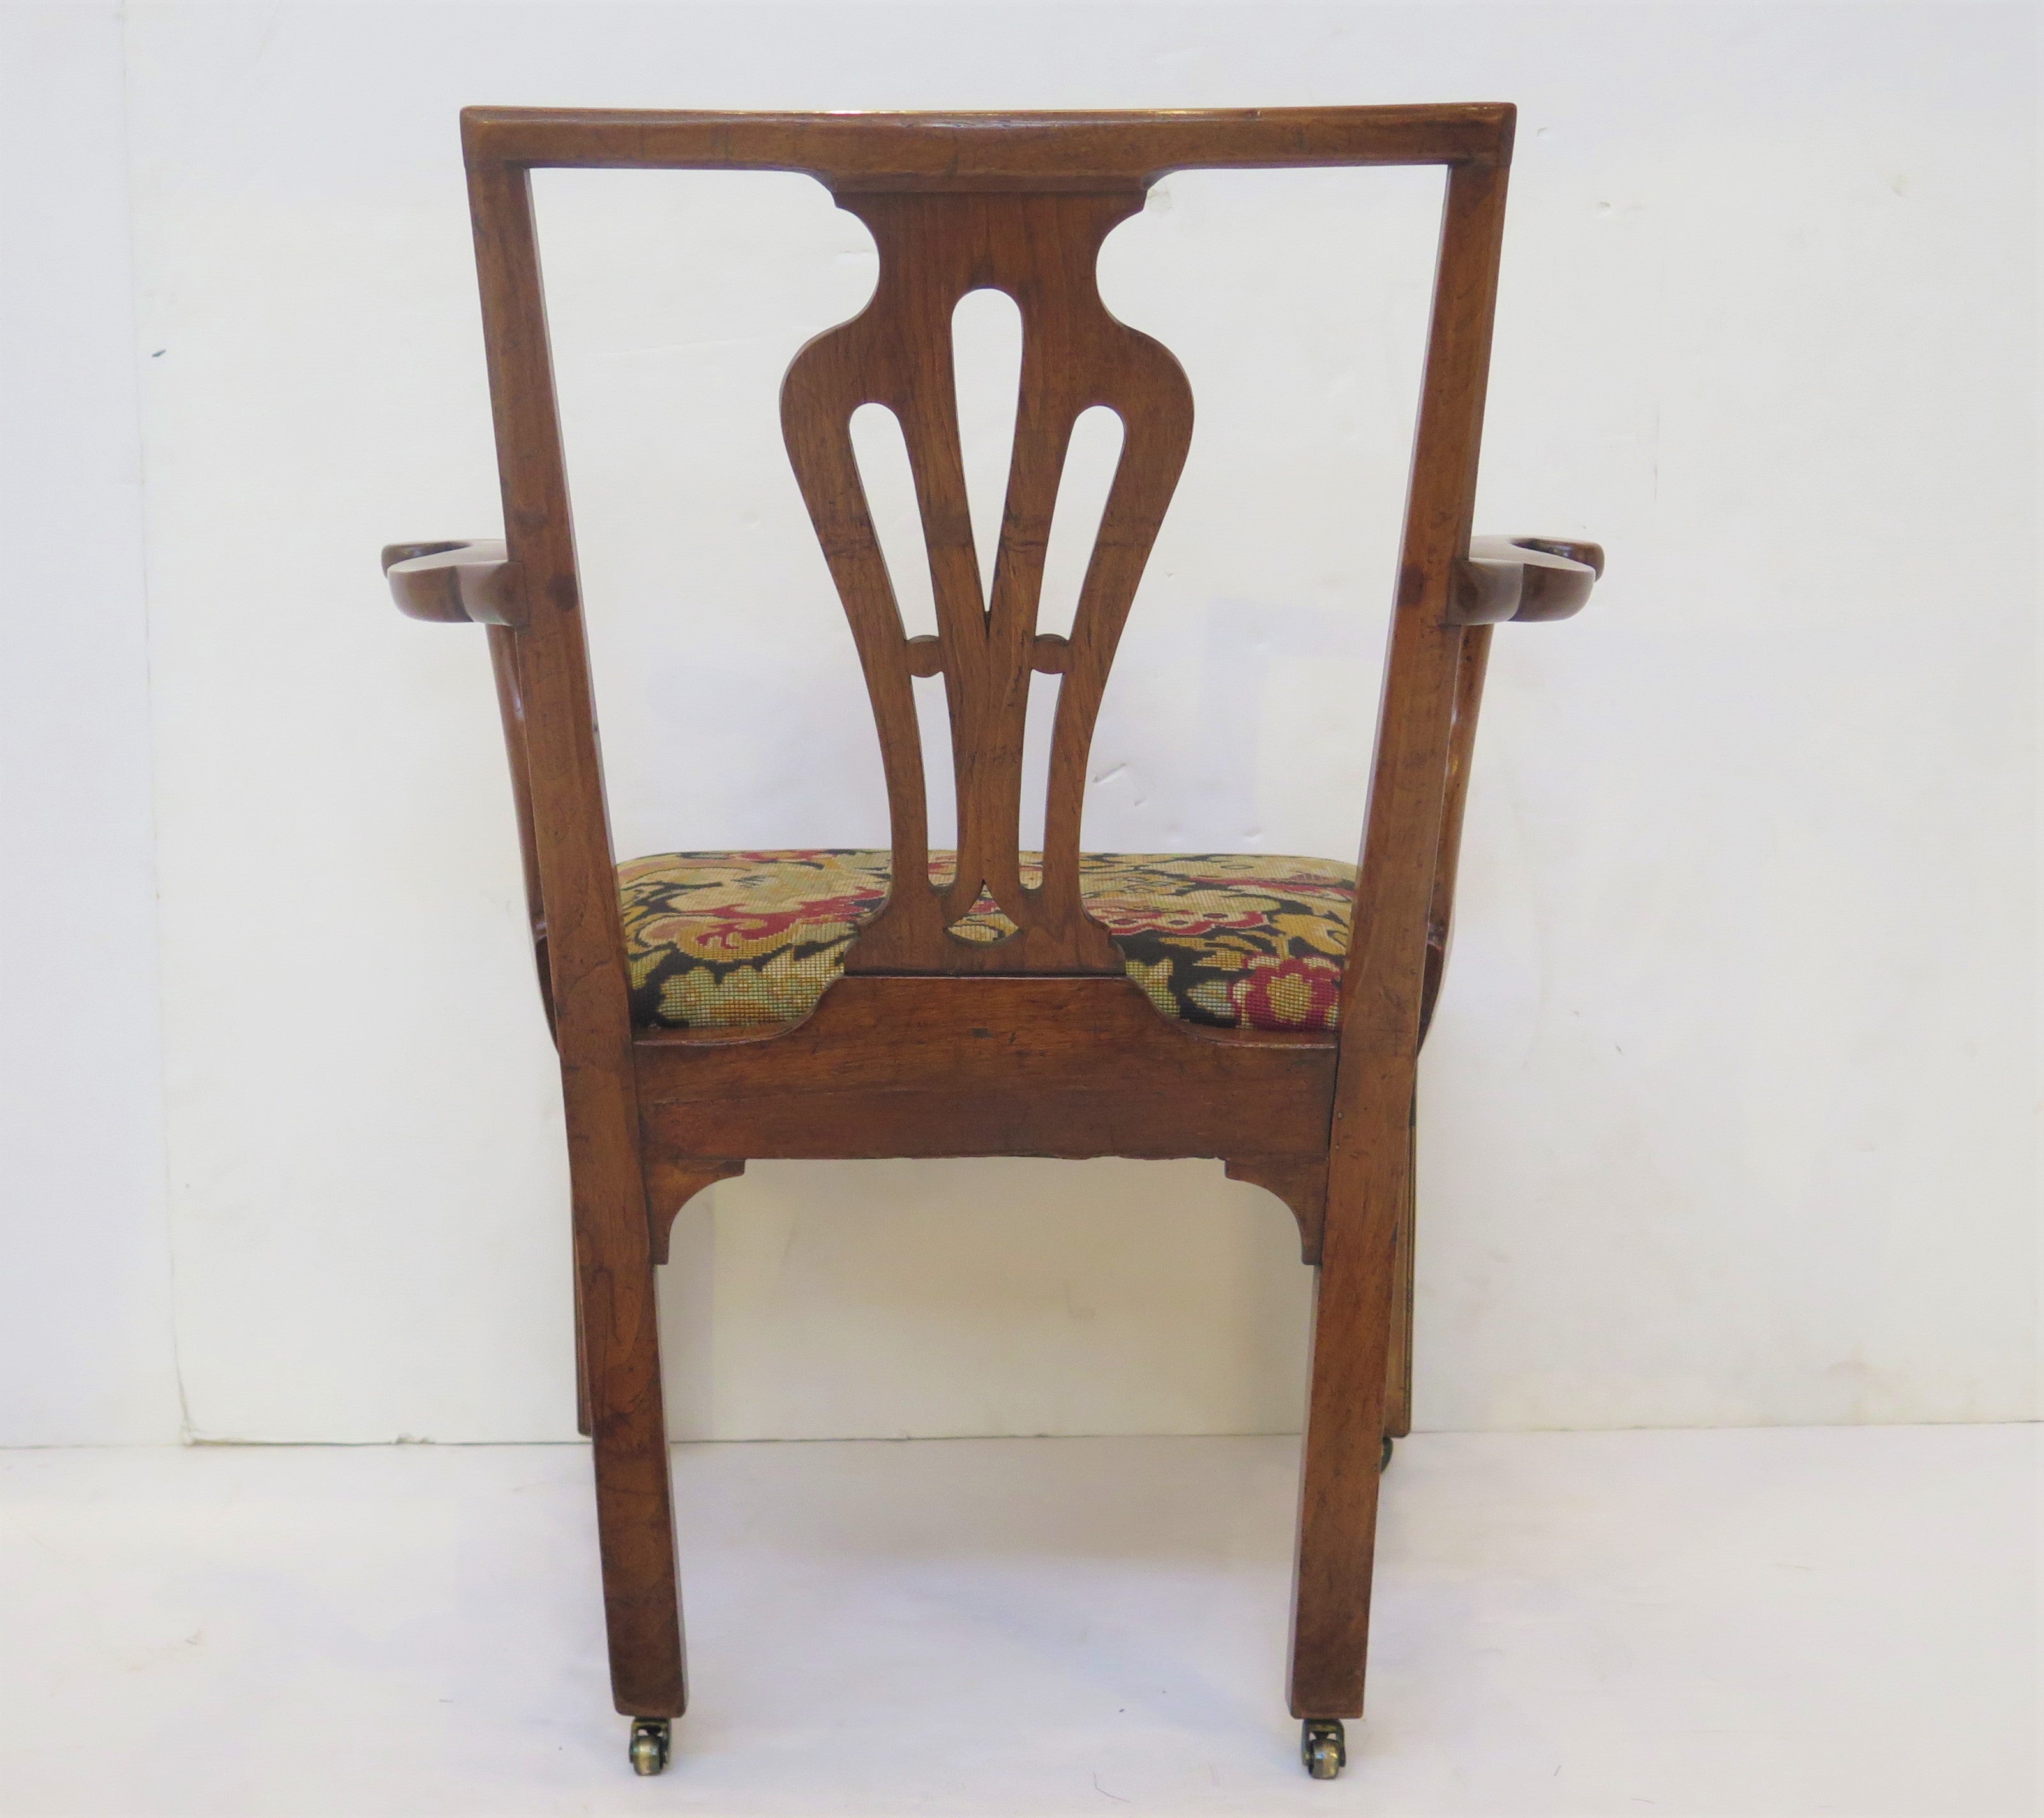 Handsome Georgian Armchair / Desk Chair of Walnut with Needlework Seat